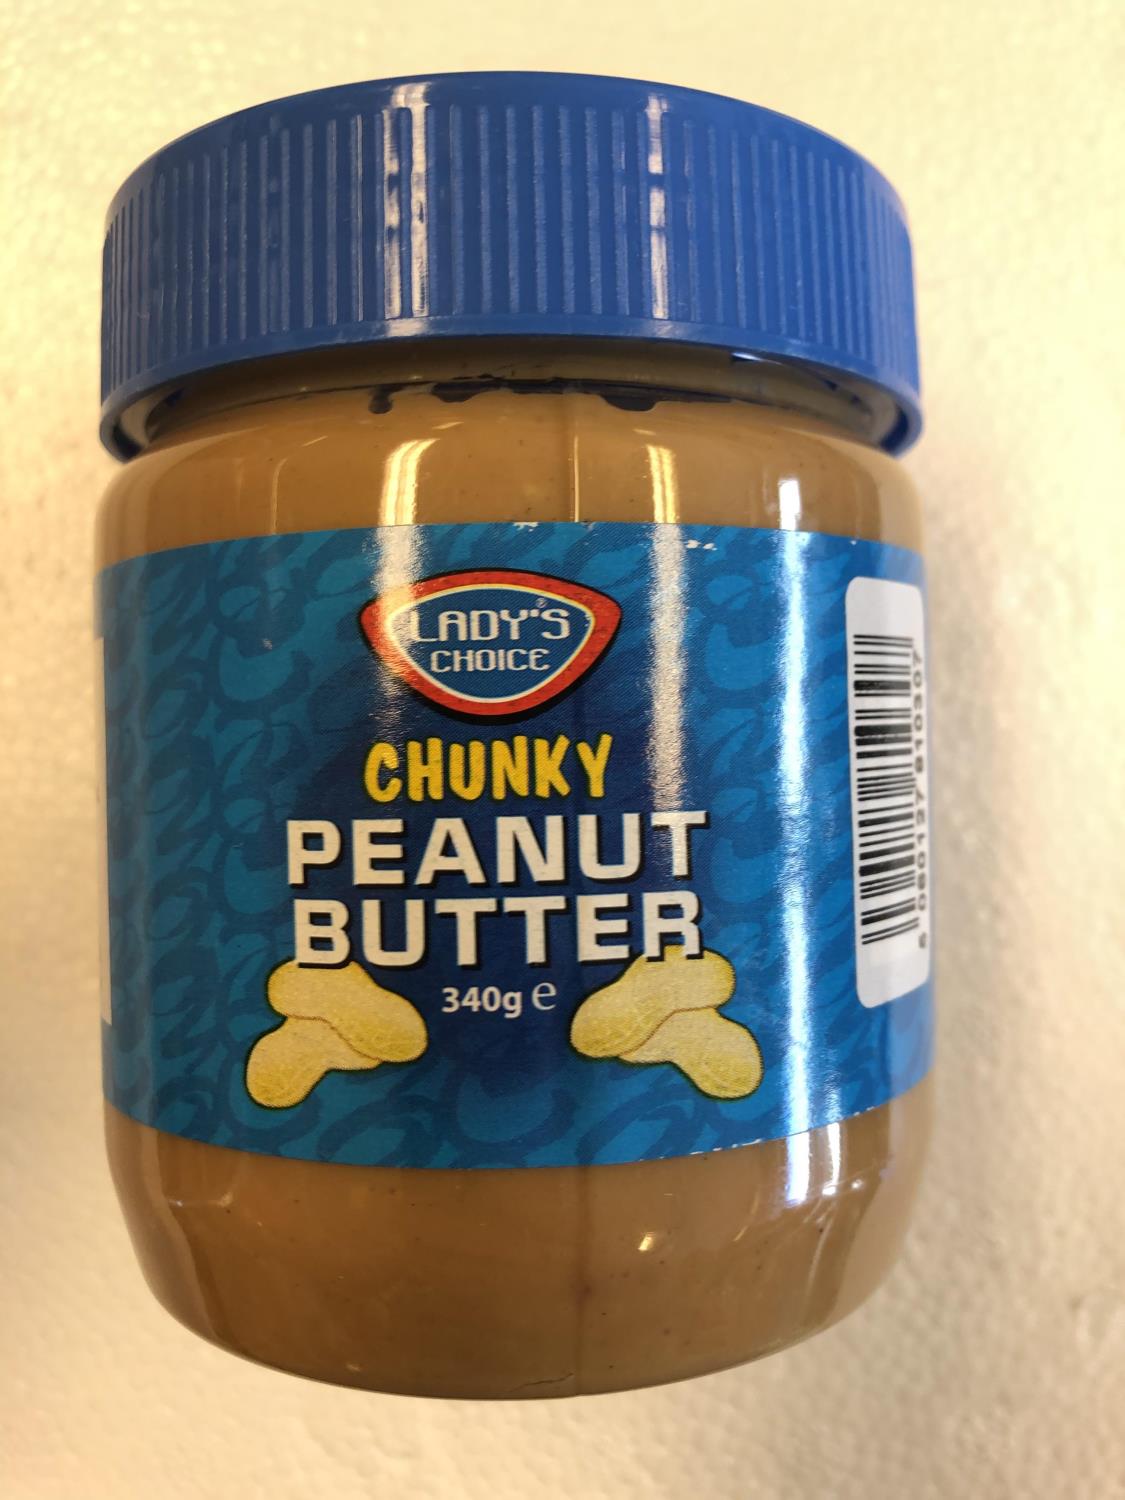 'LADY'S CHOICE Chunky Peanut Butter 340g